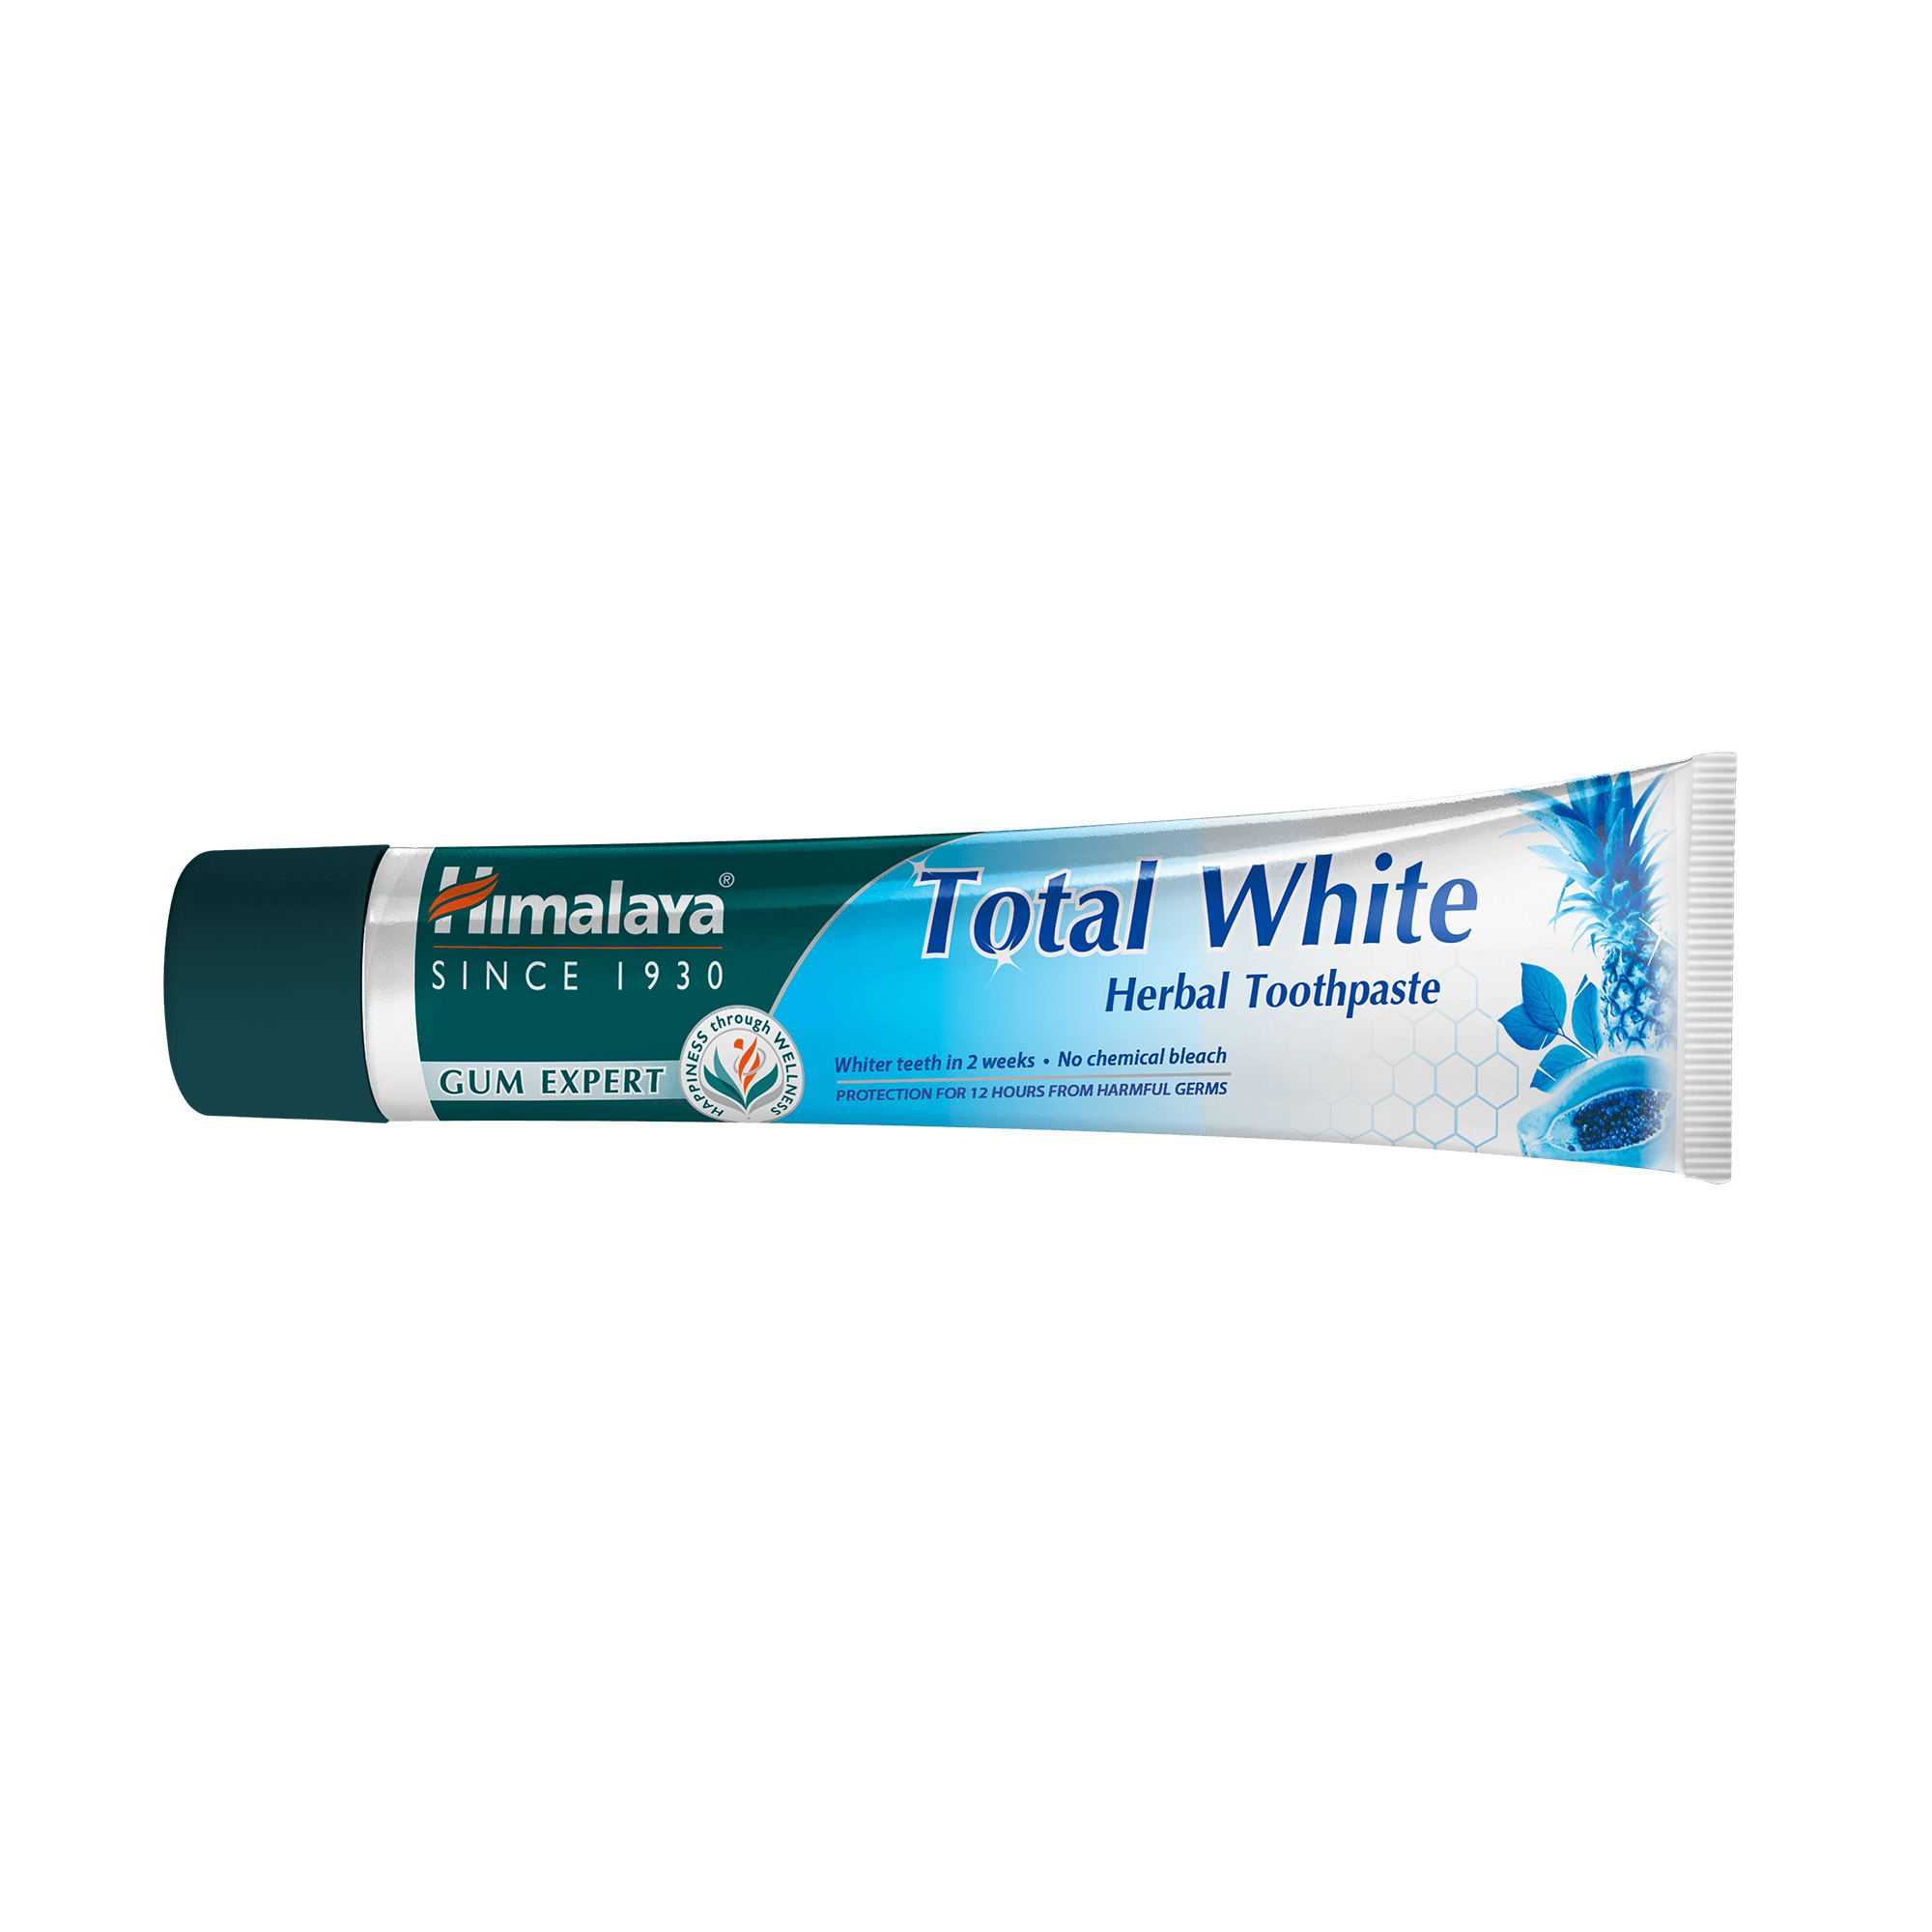 Himalaya Total White Herbal Toothpaste Tube